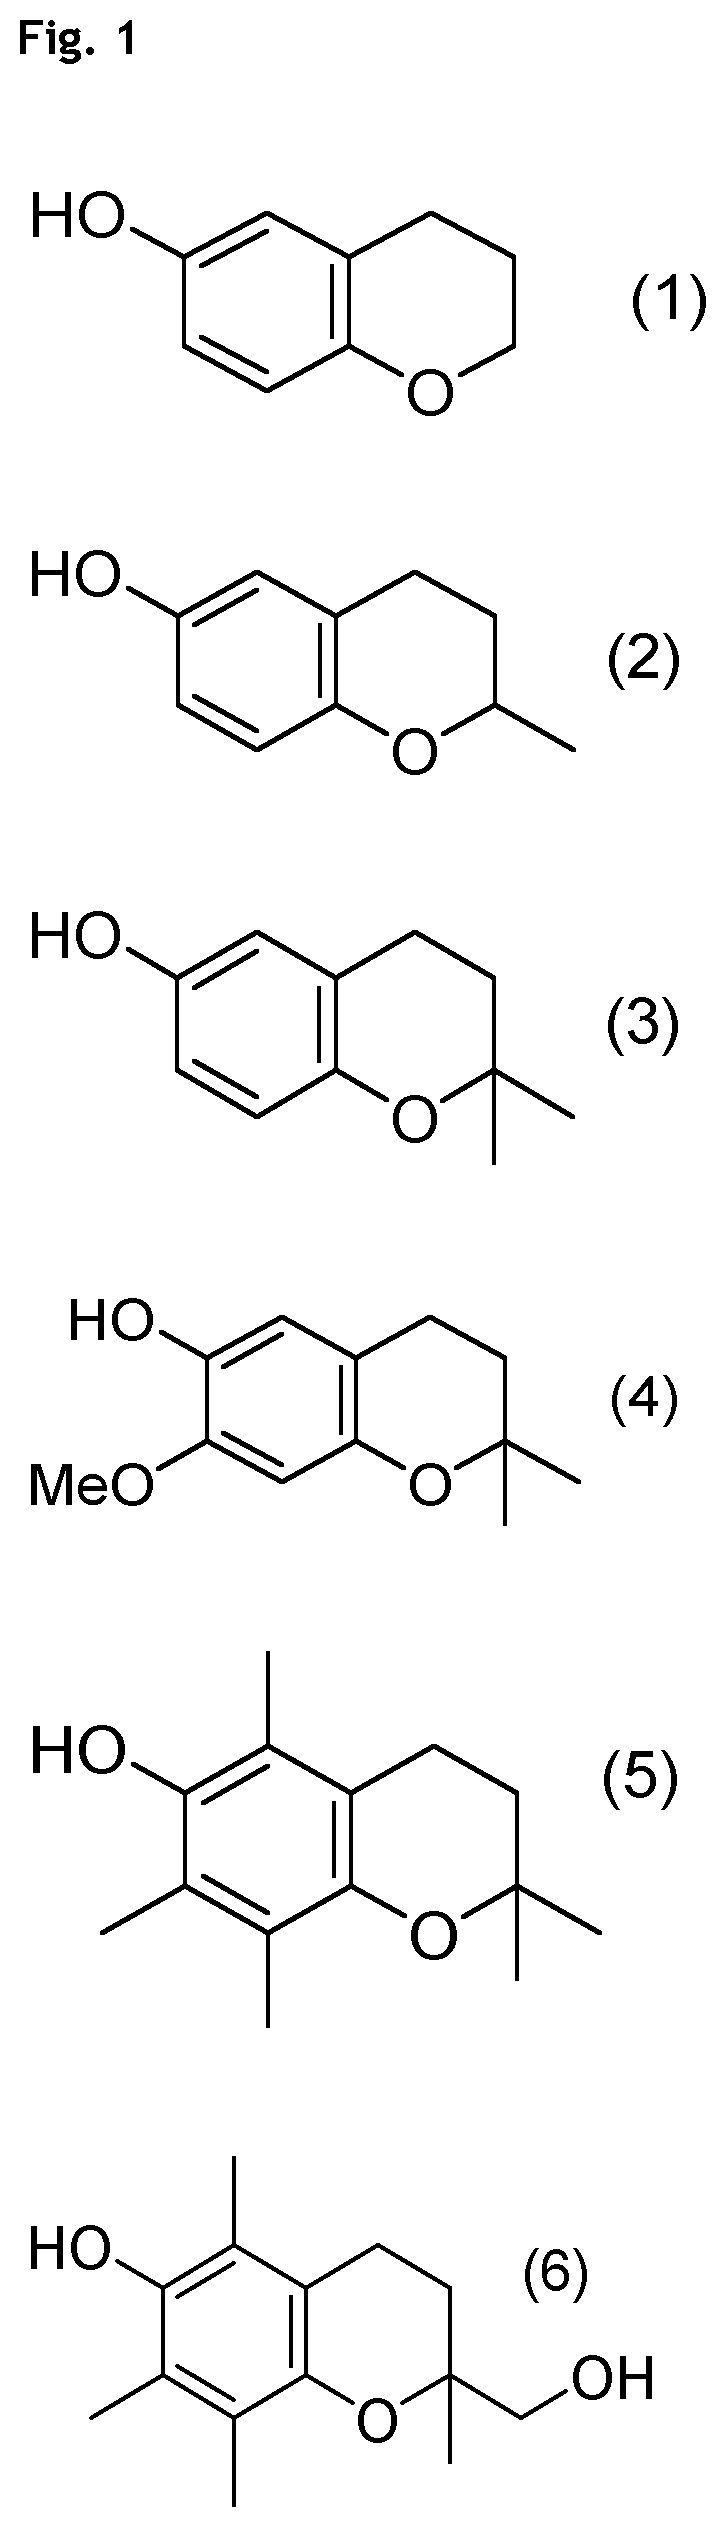 Novel use of substituted chroman-6-ols